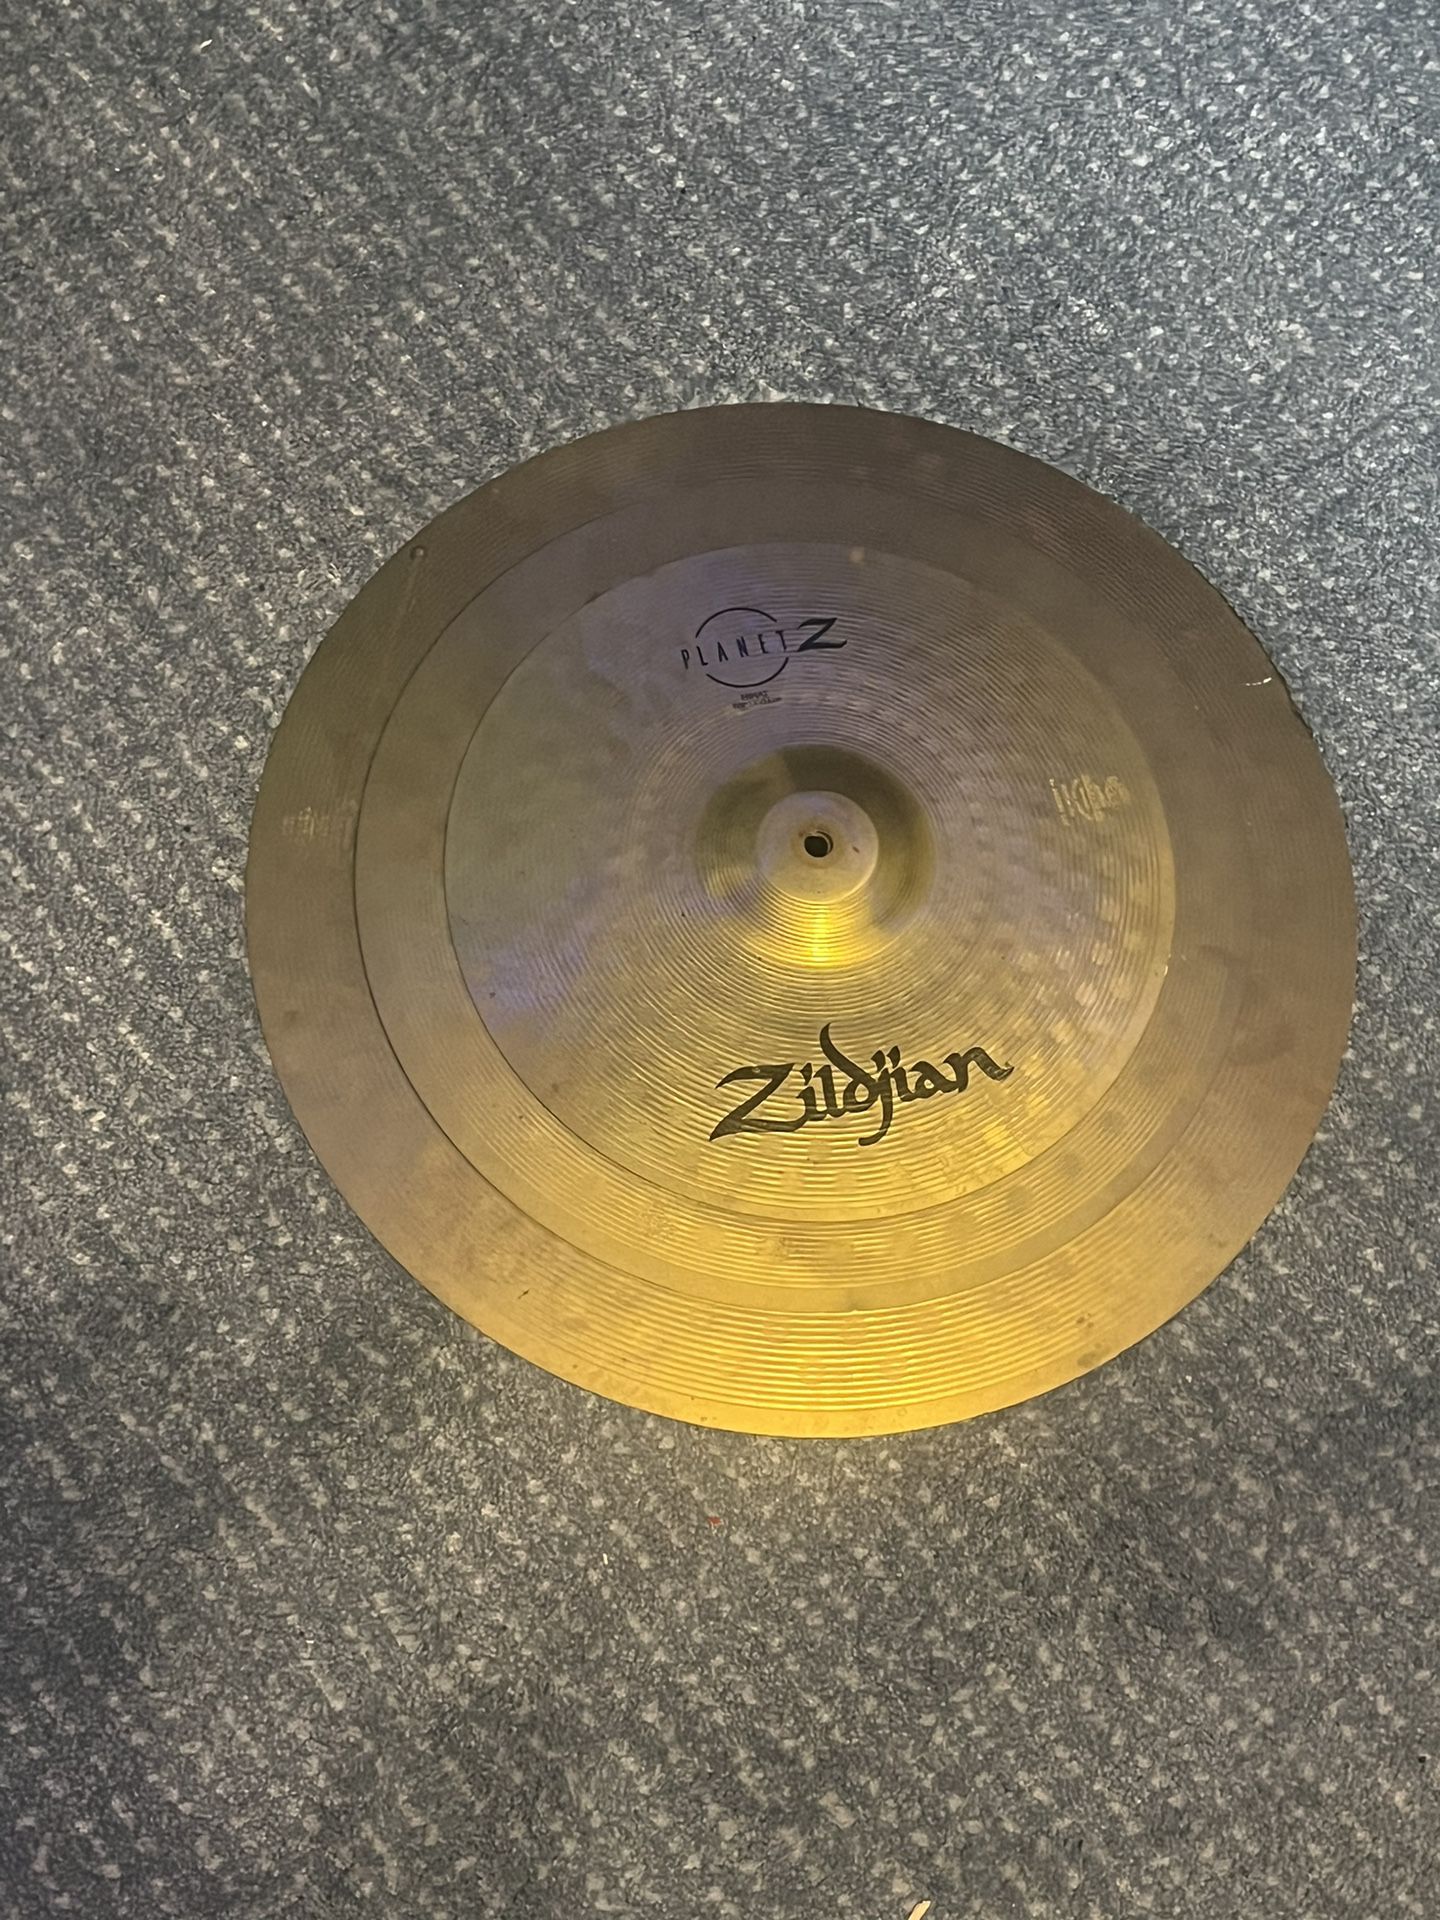 Planet Z Zildjian Cymbal Pack 